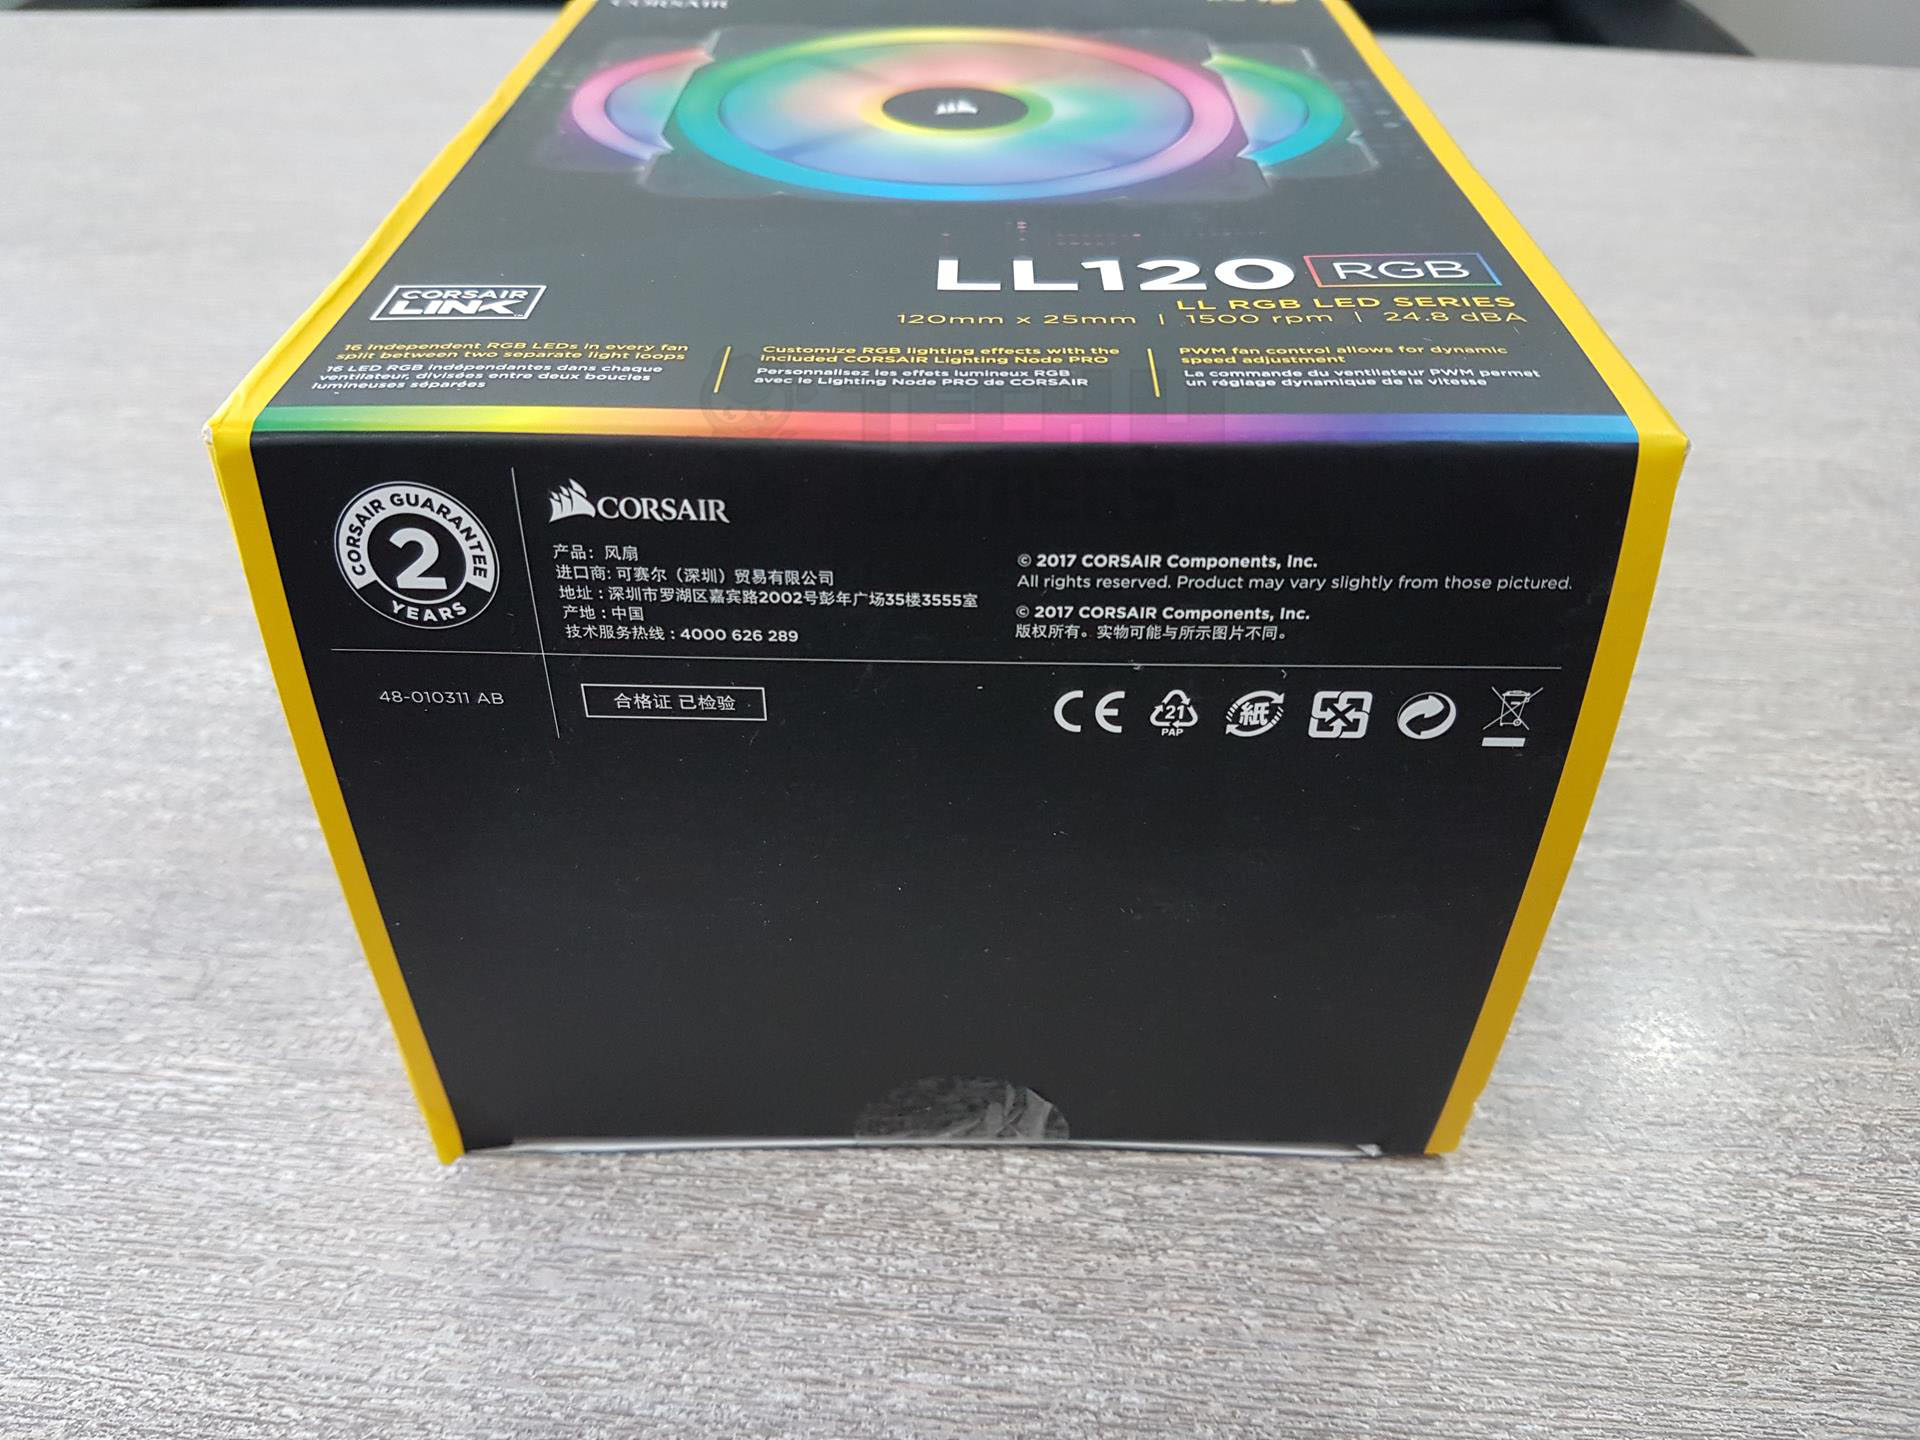 Corsair LL120 RGB LED 3x Fans Pack Review